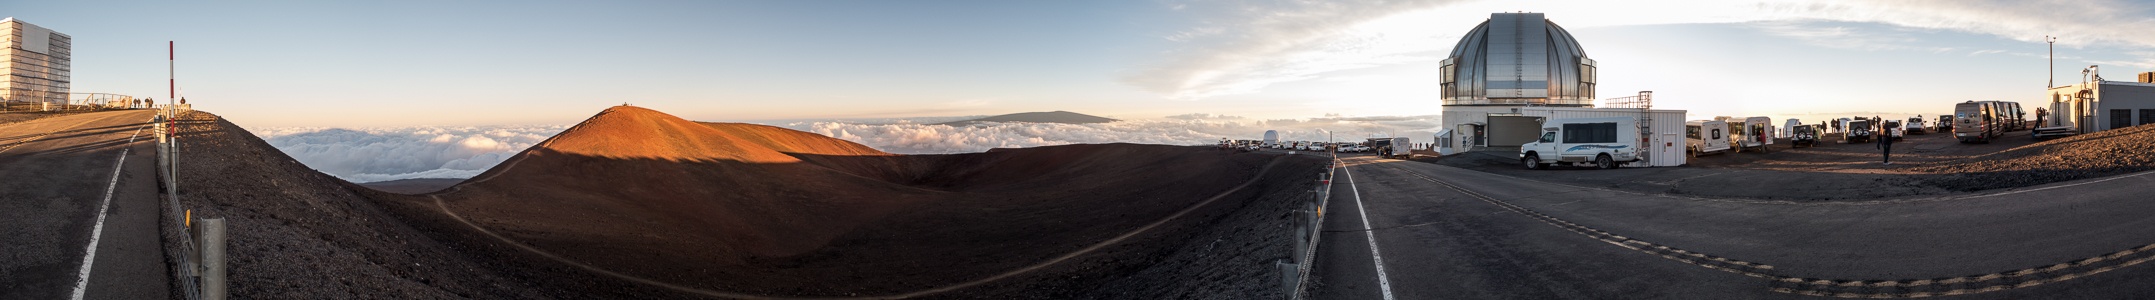 Mauna-Kea-Observatorium, Gipfel, Mauna Loa, Mauna-Kea-Observatorium Mauna Kea